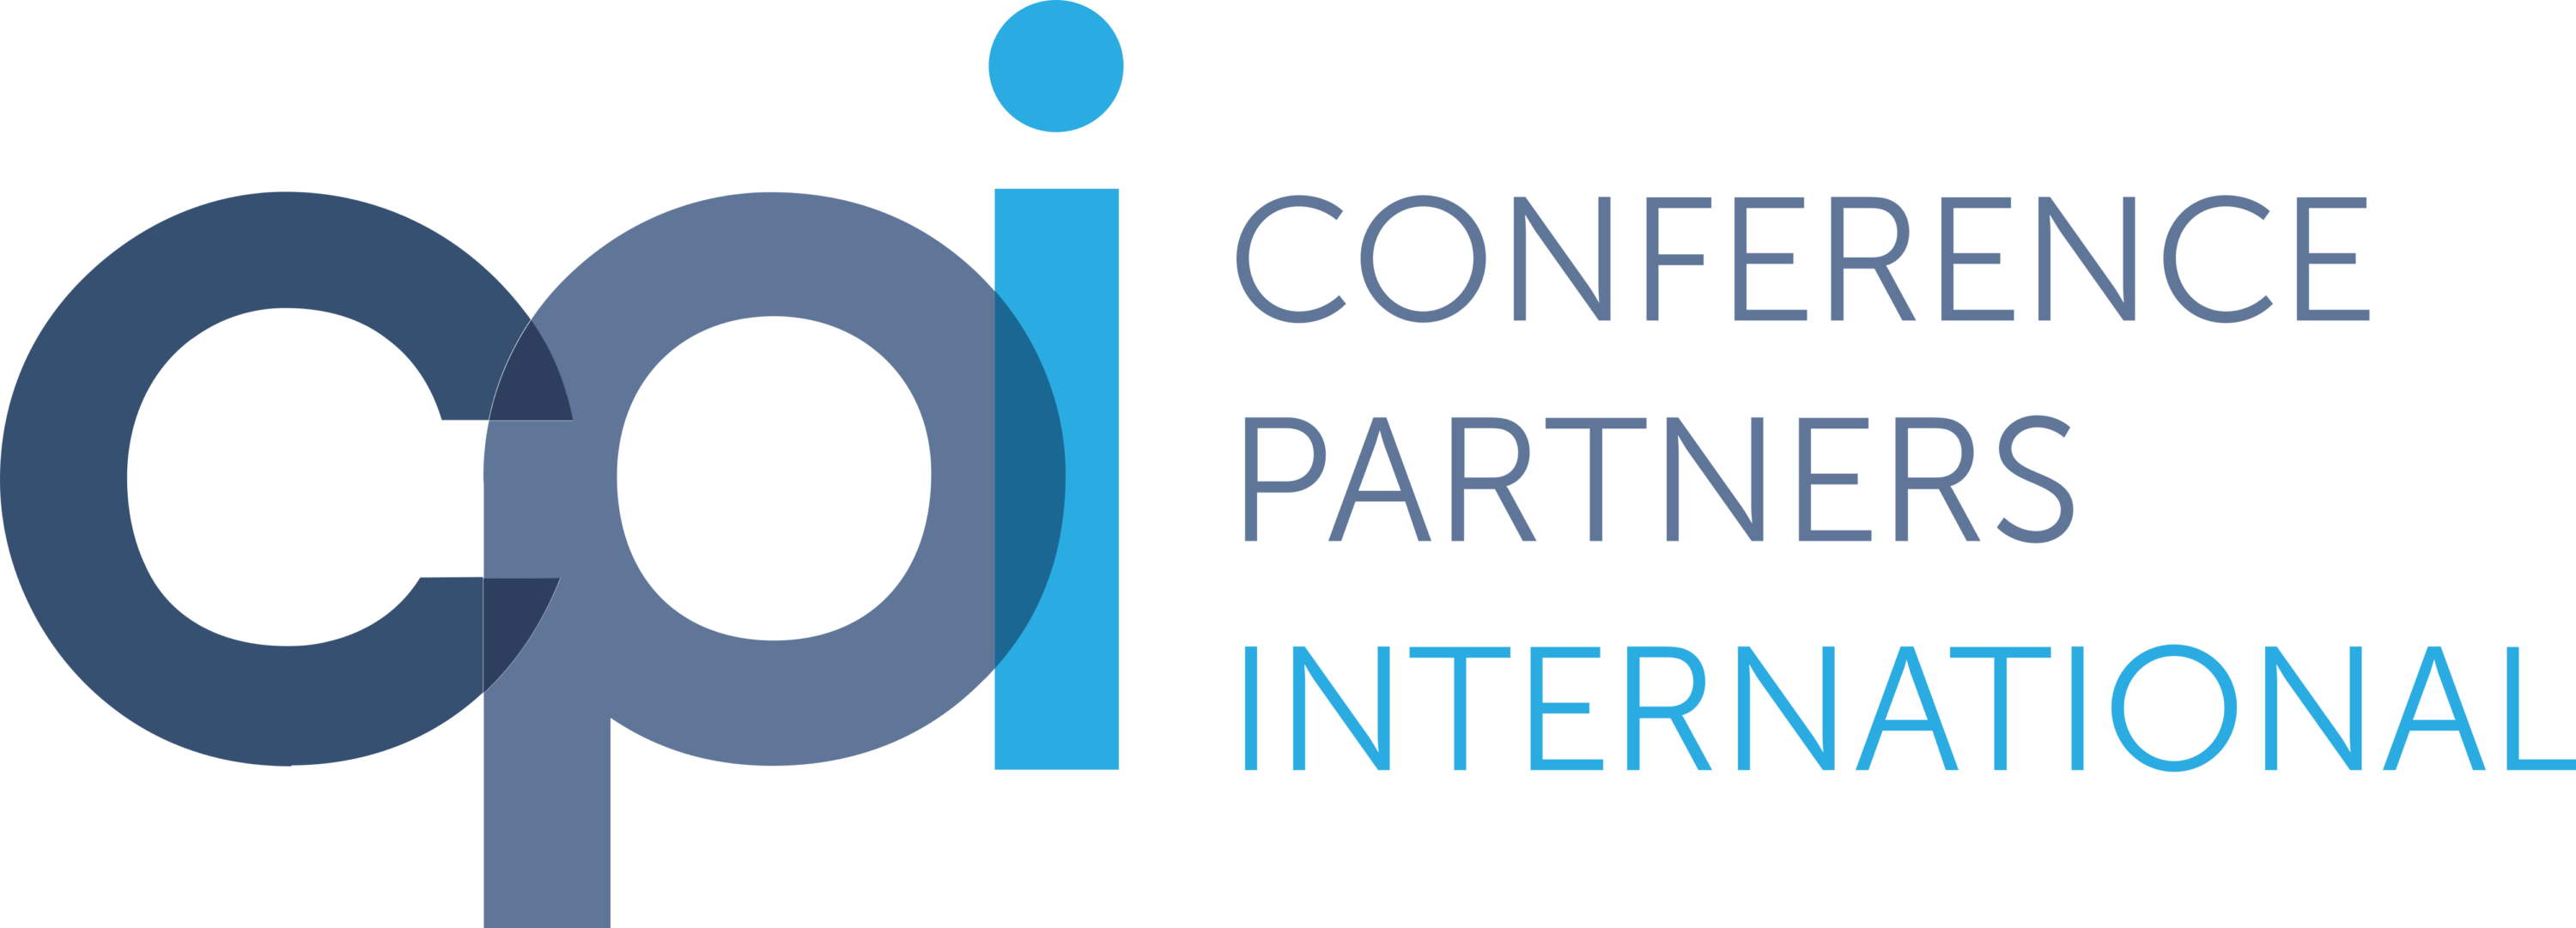 Conference Partners International Logo